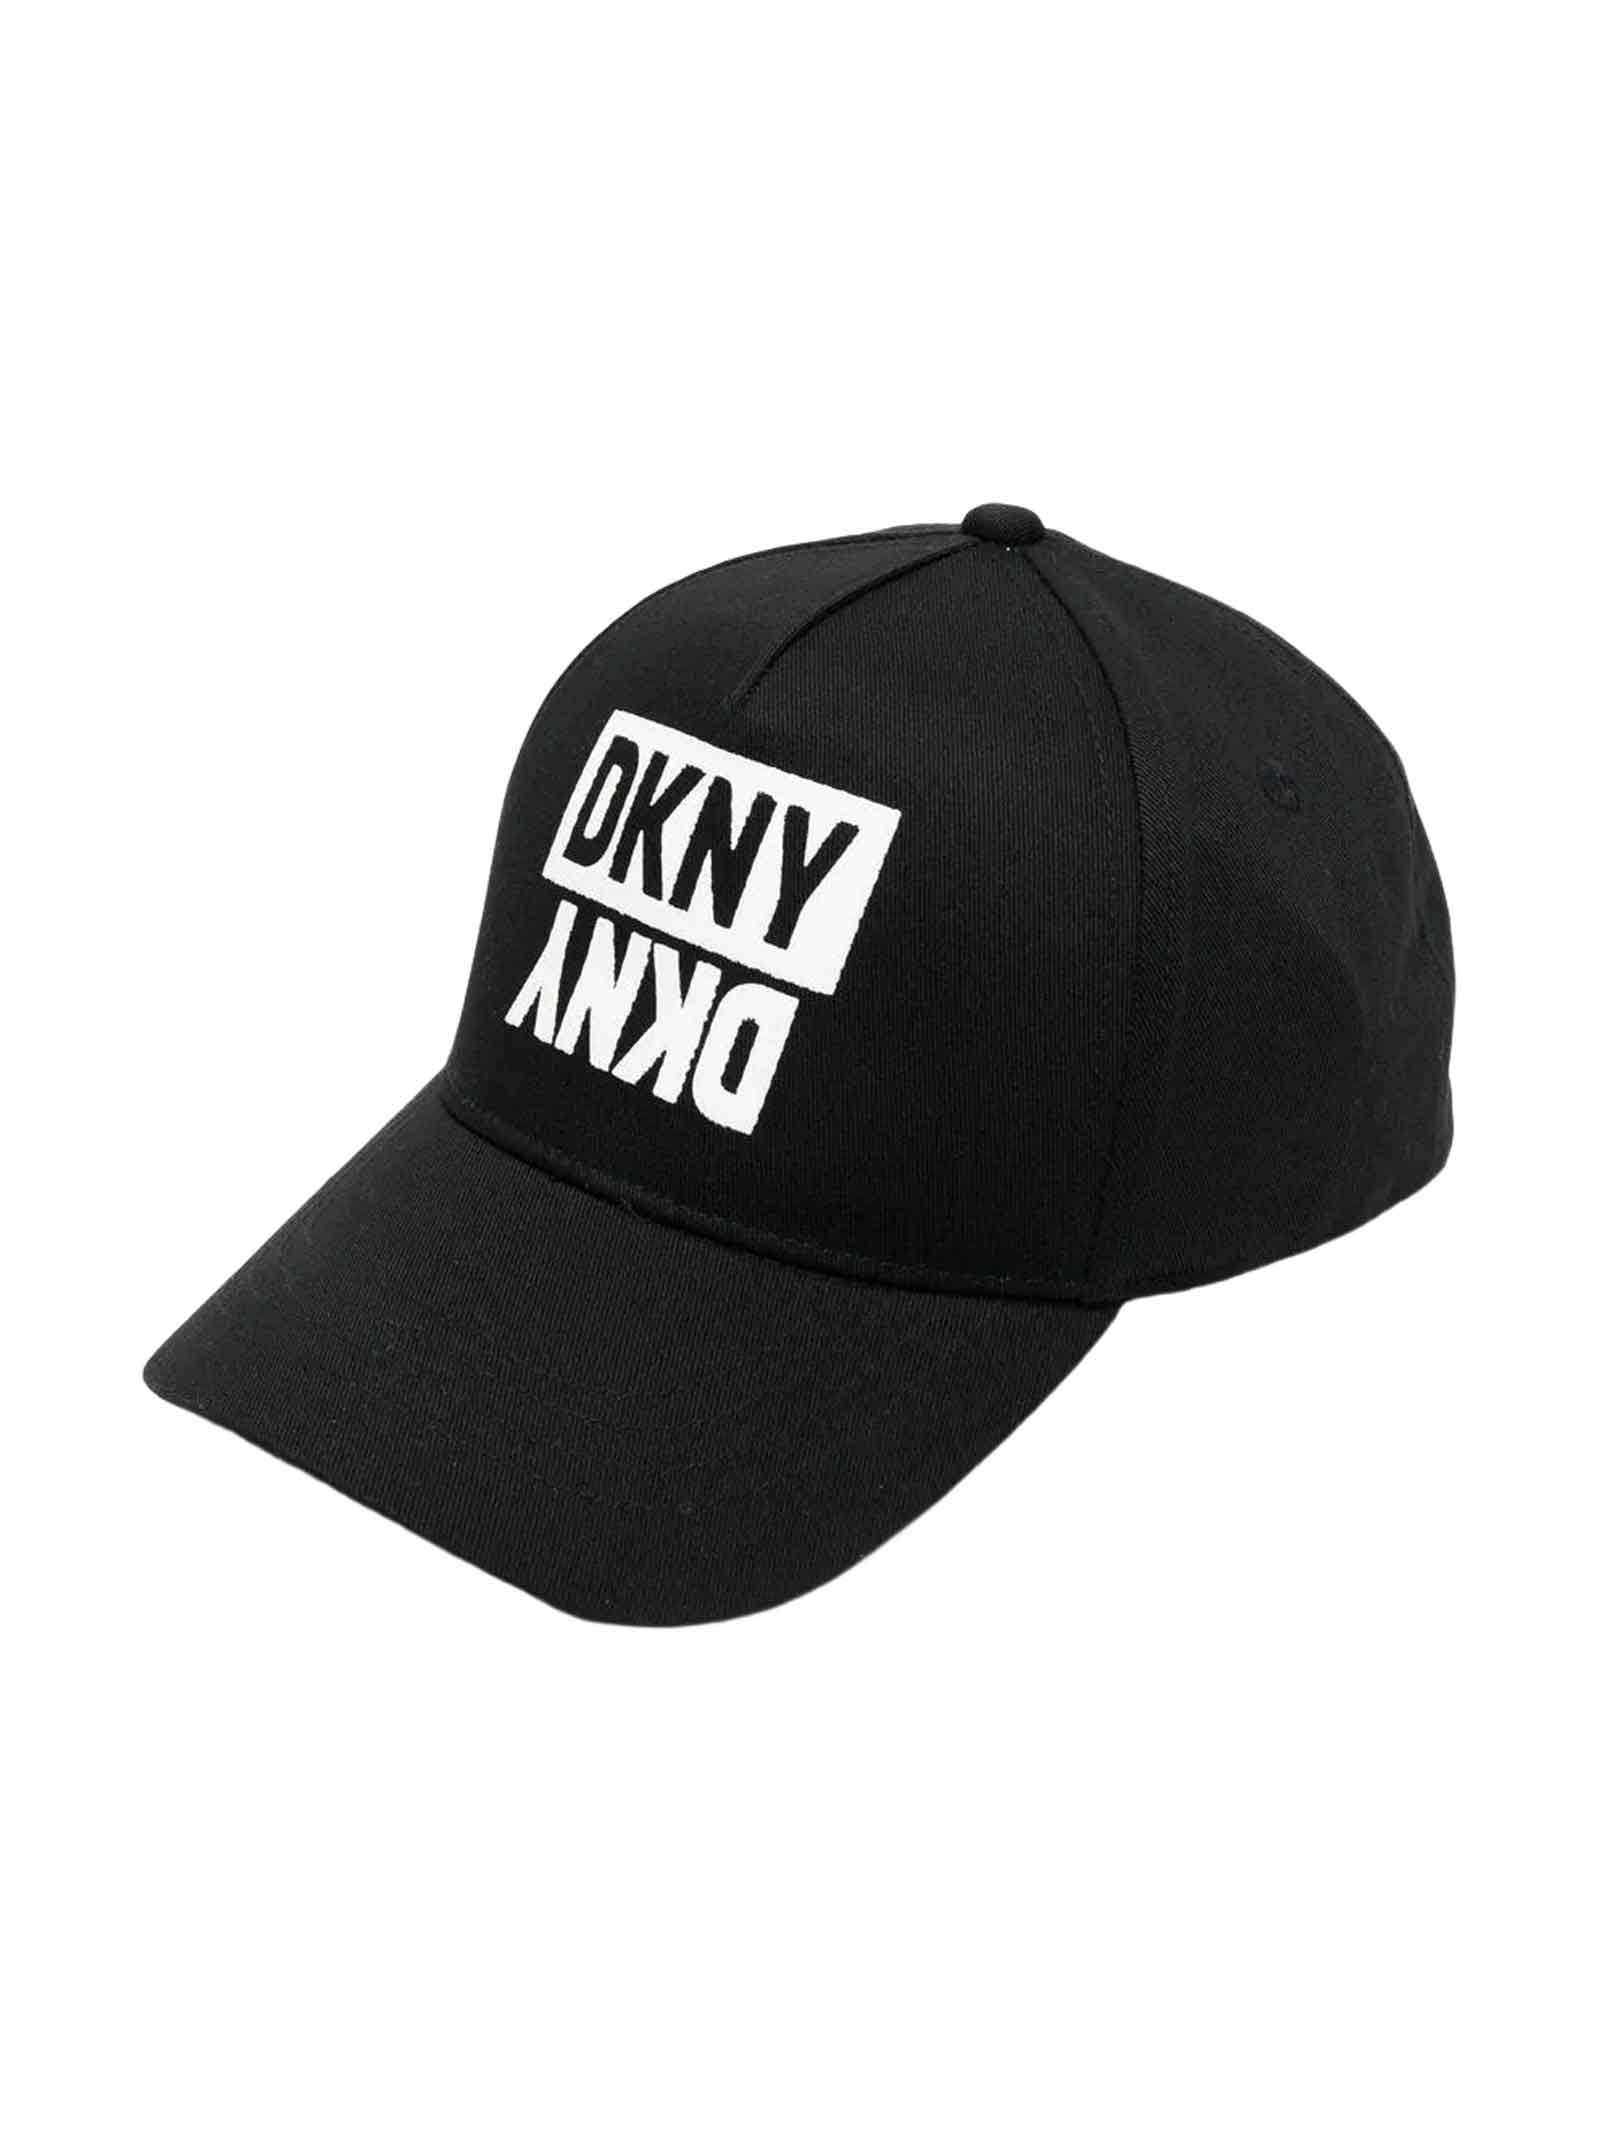 DKNY Black Hat Girl